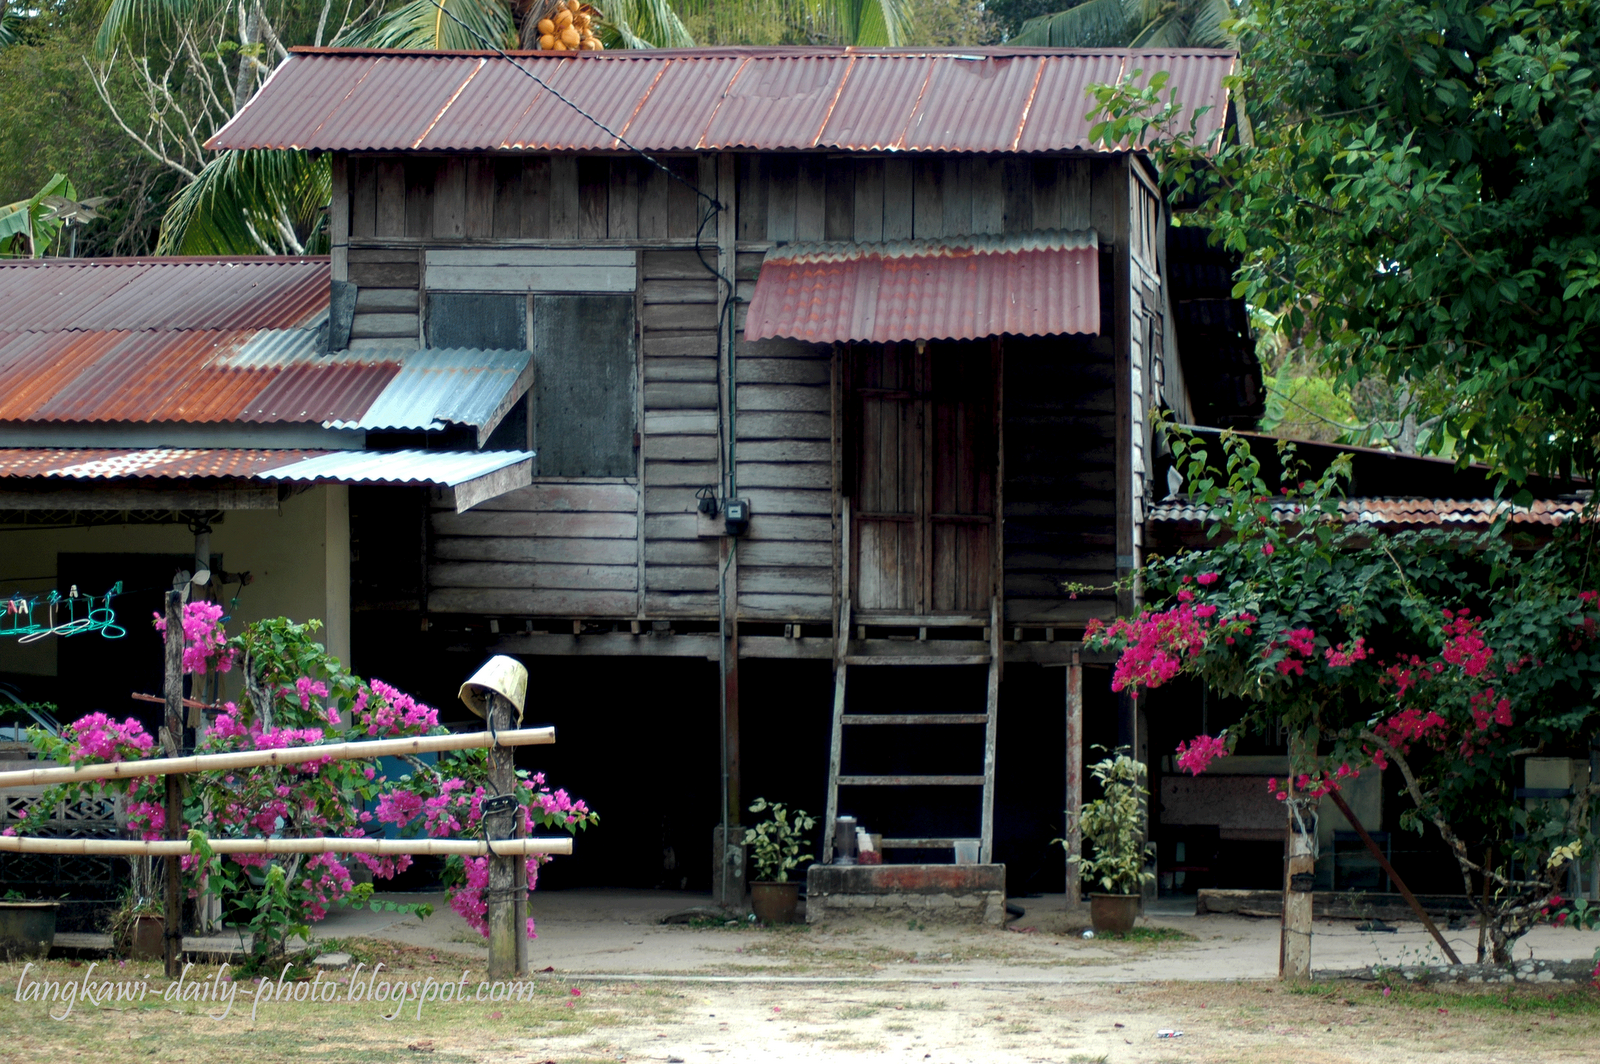 Foto Rumah  Kampung Tercantik  Blog Images